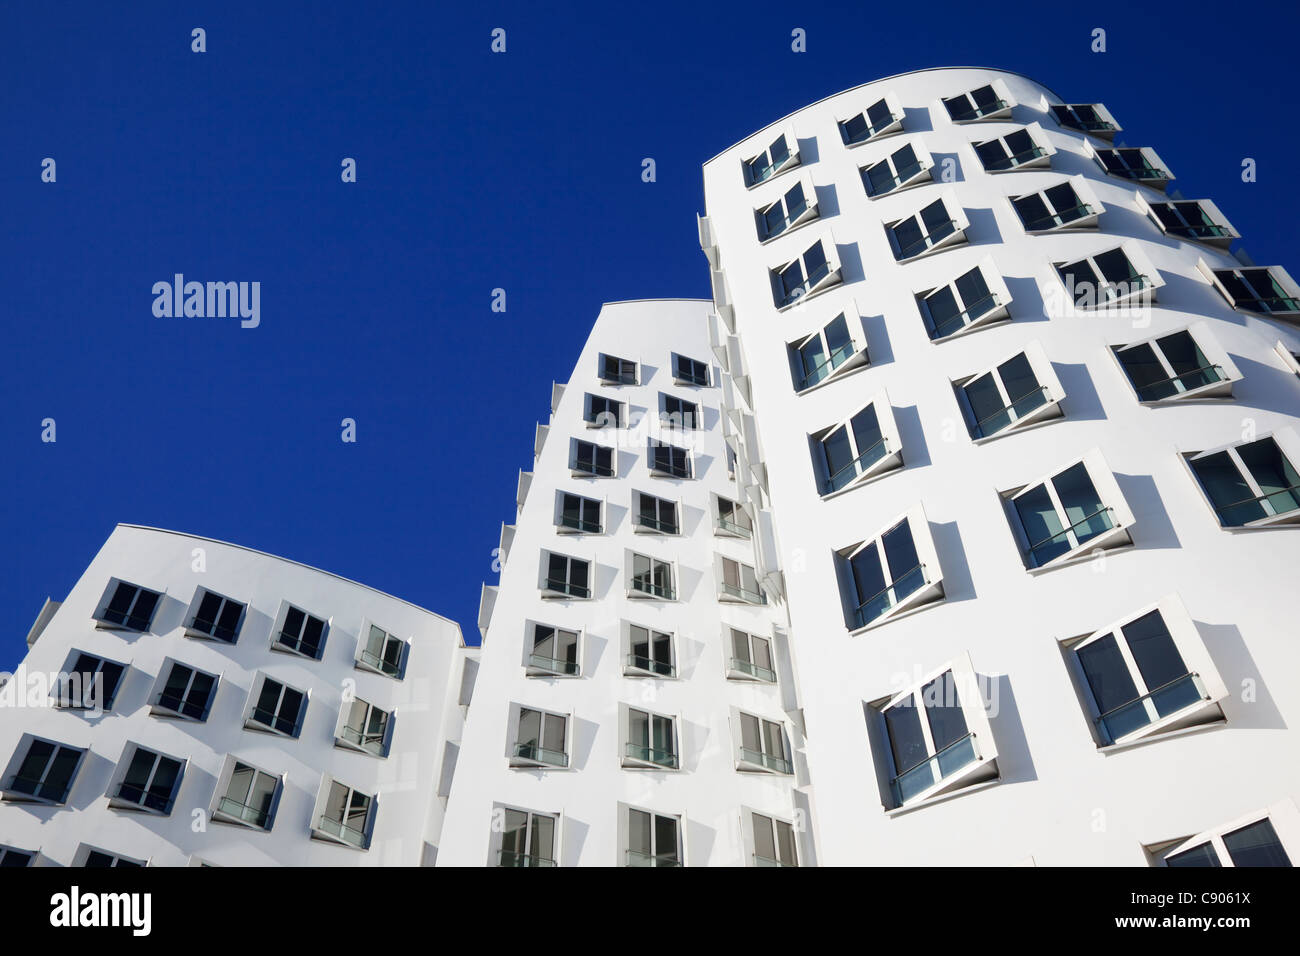 Neuer Zollhof, building designed by architect Frank O. Gehry, Medienhafen, Düsseldorf, North Rhine-Westphalia, Germany, Europe Stock Photo